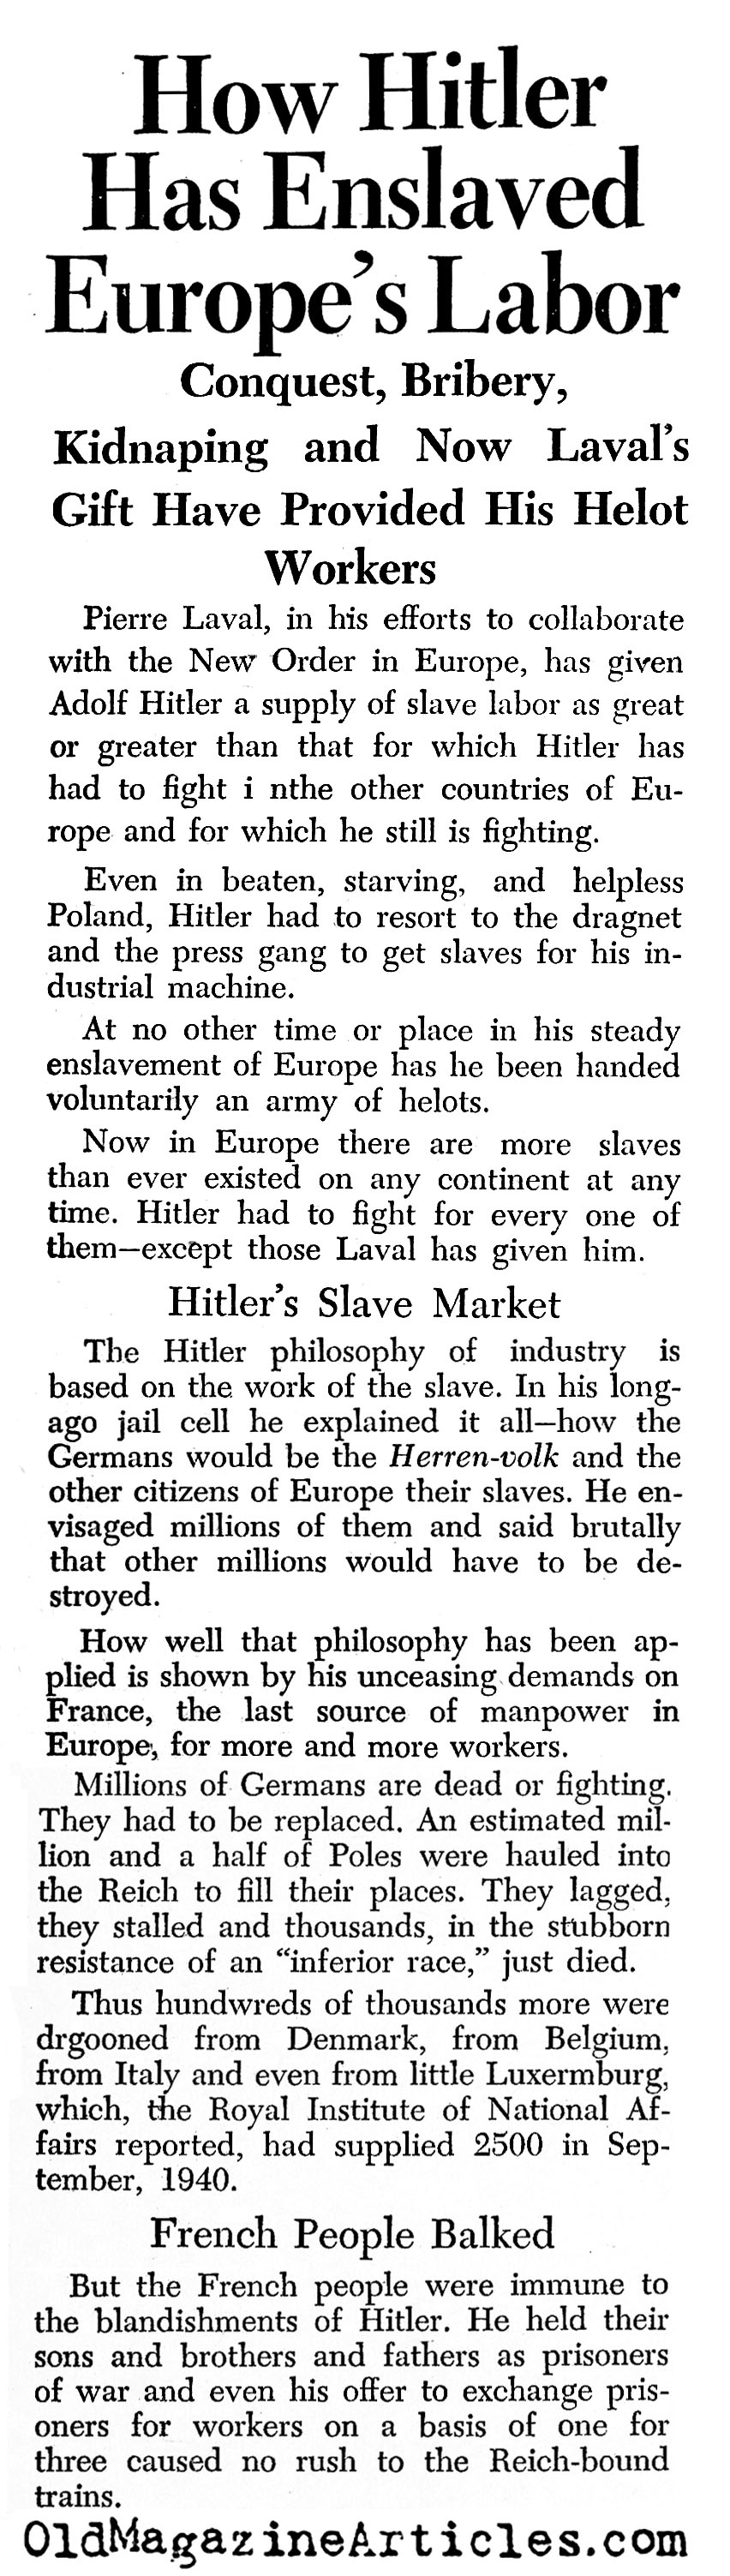 Europe Enslaved (PM Tabloid, 1942)